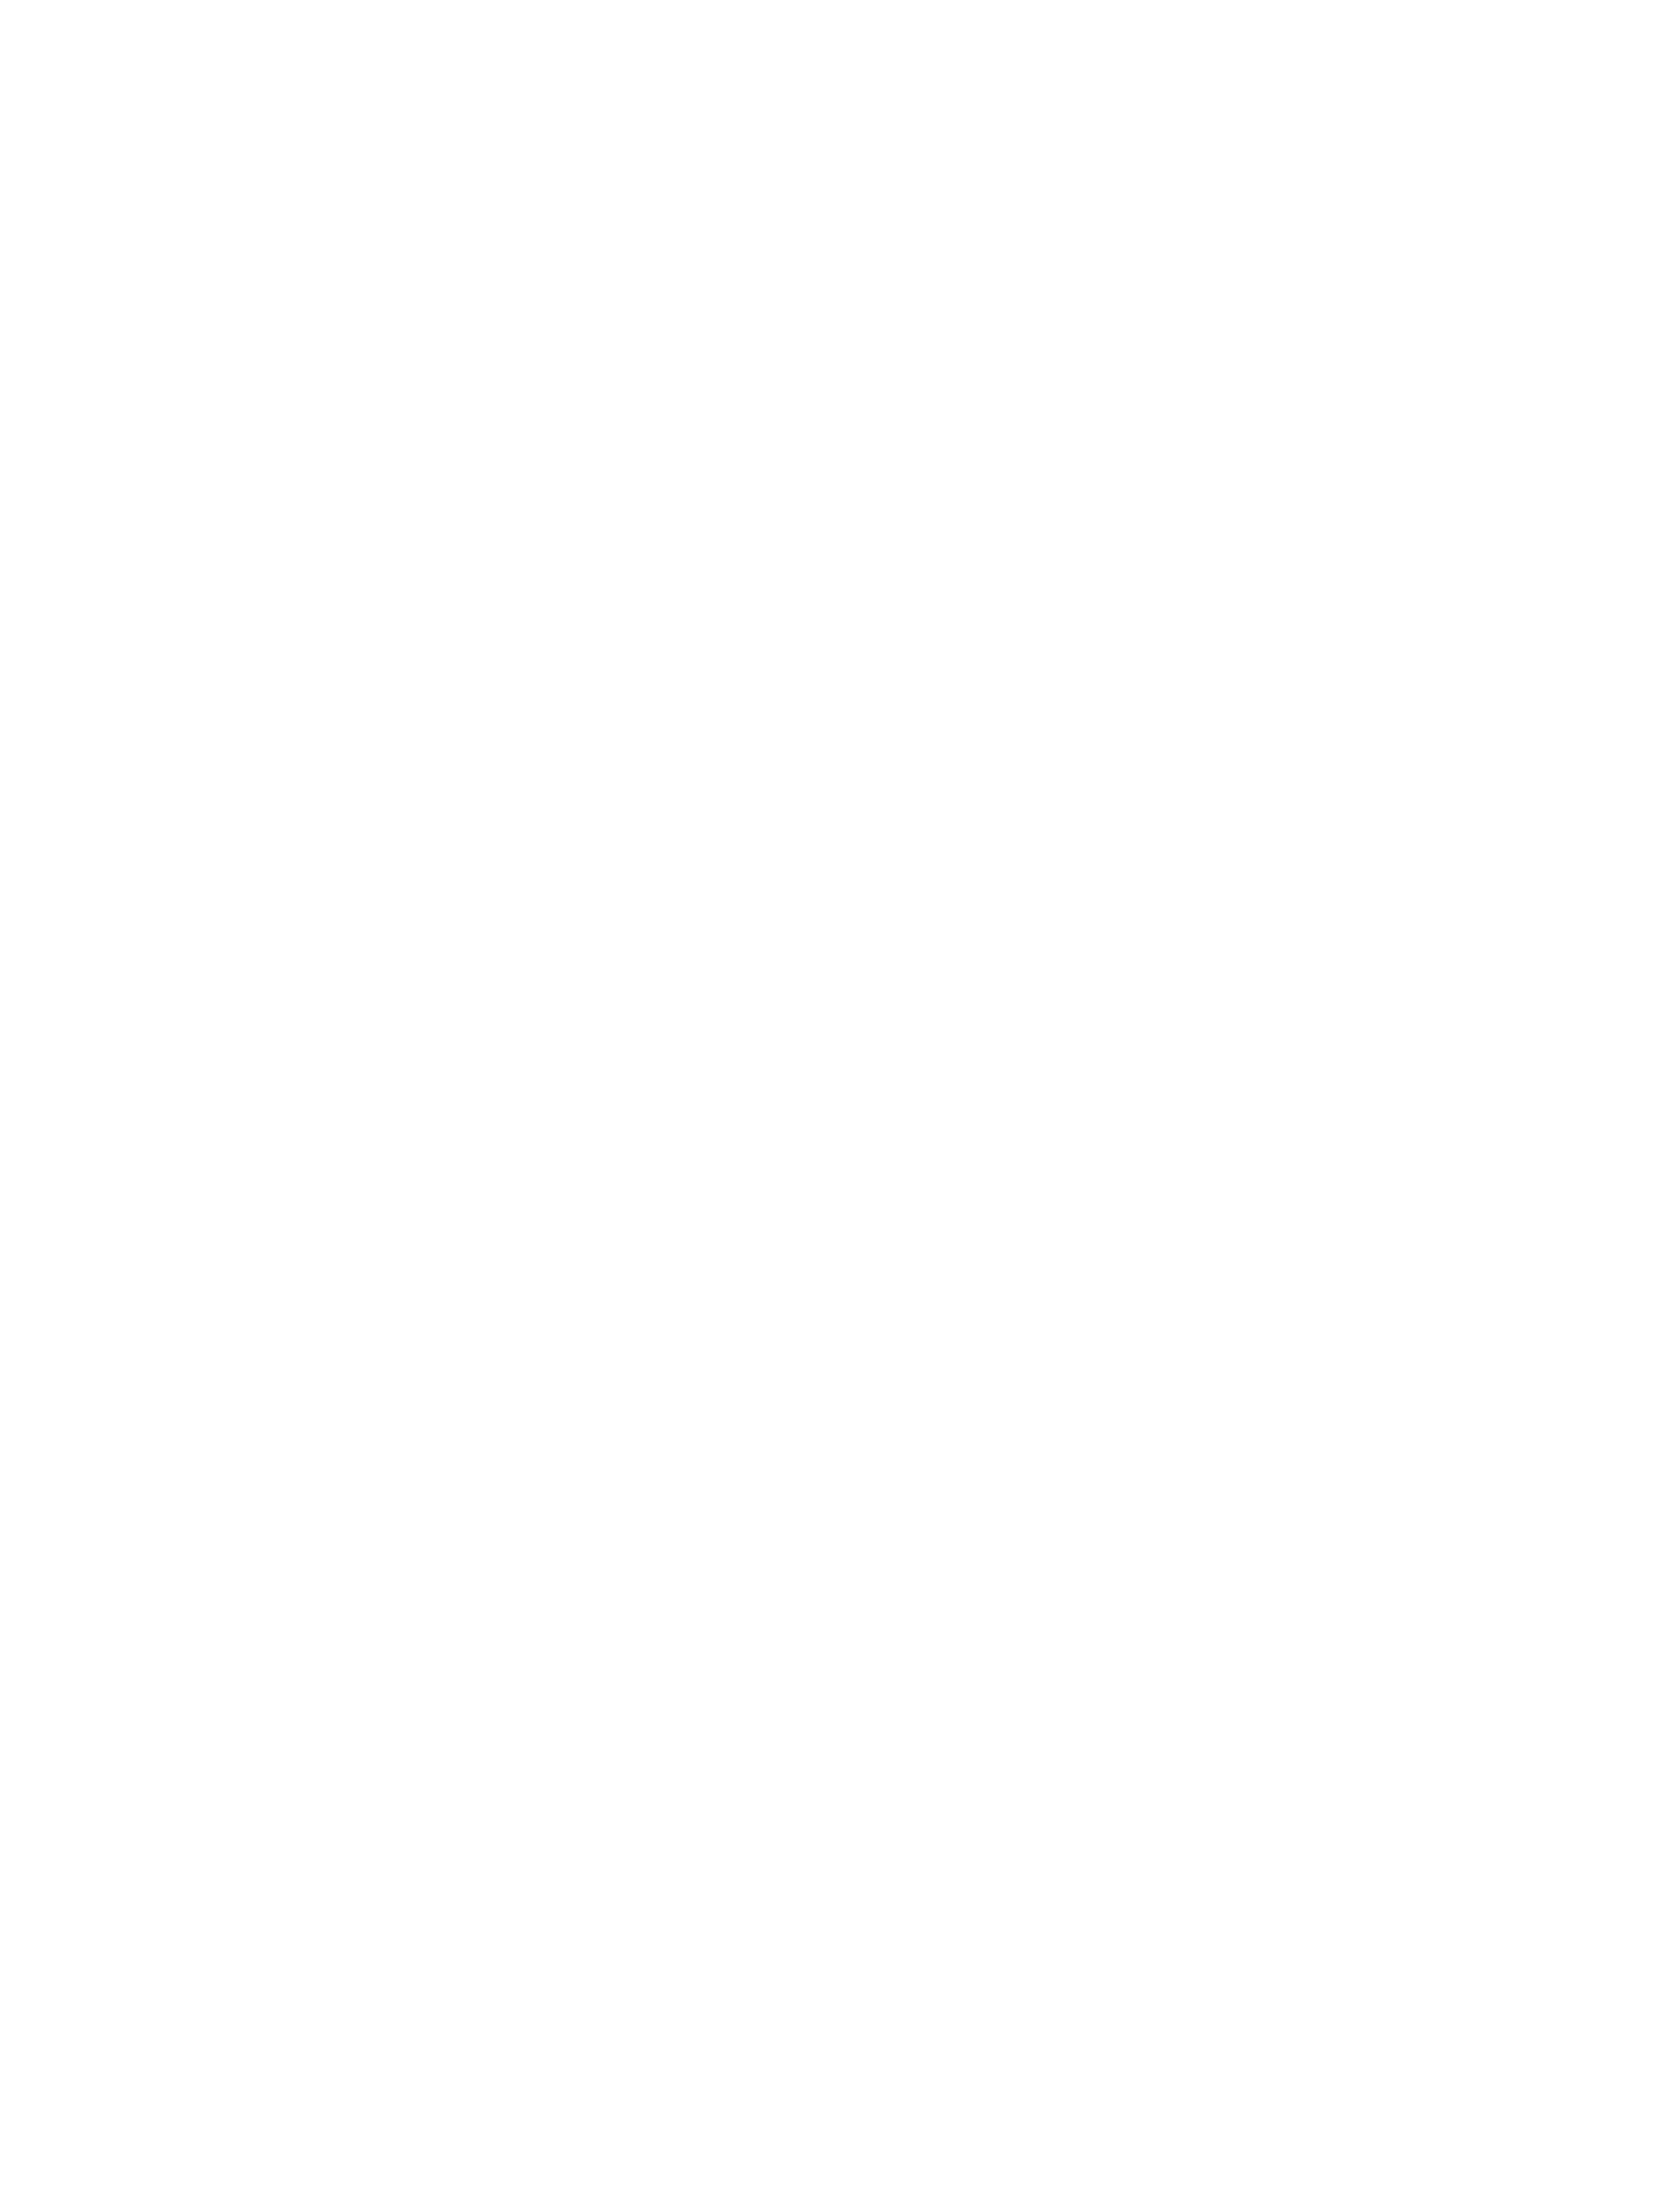 MMGY Global Careers